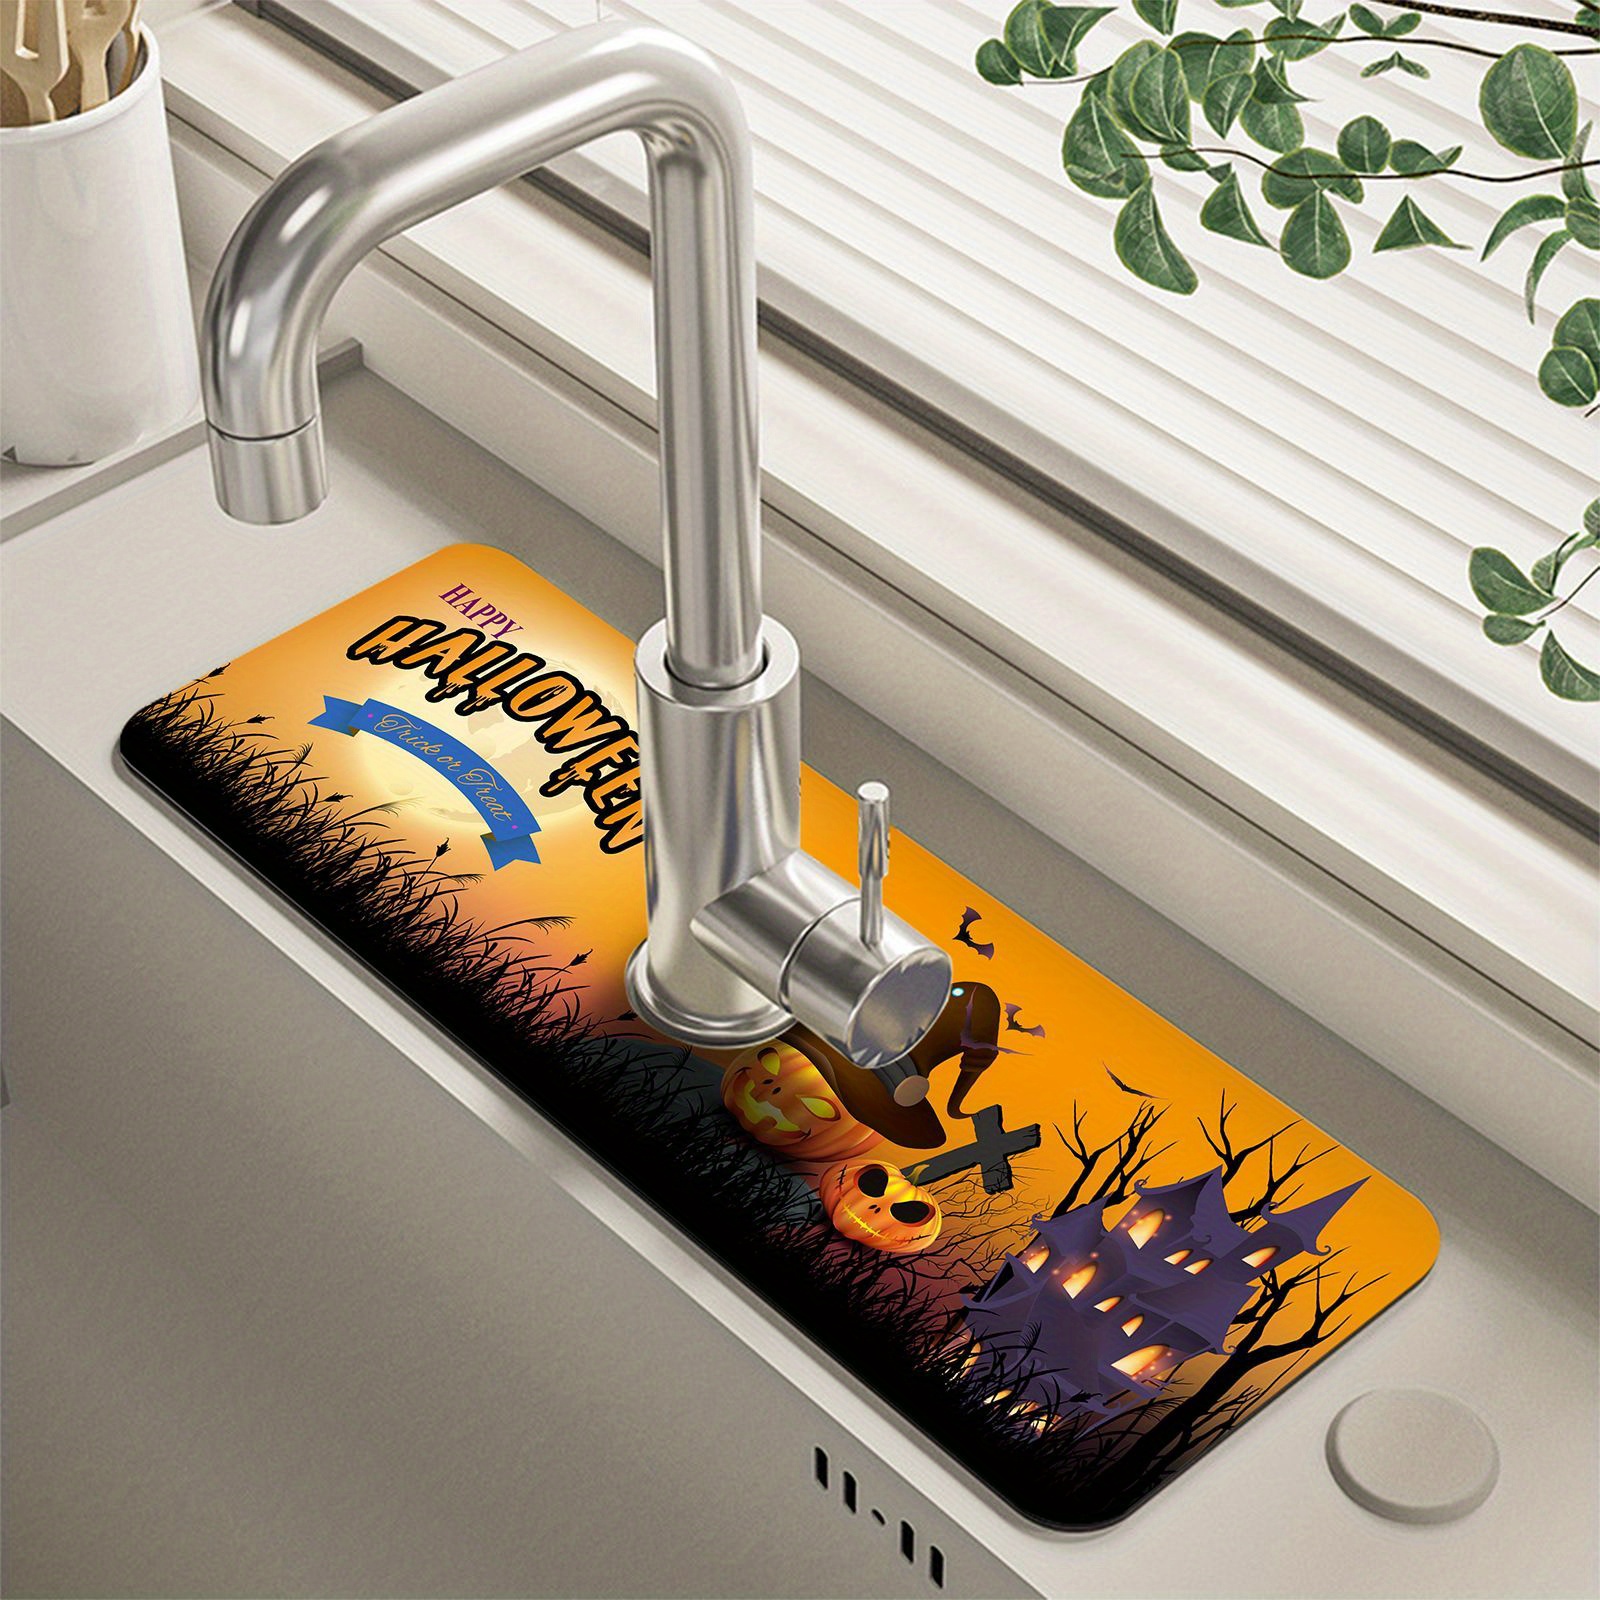 Sink Faucet Counter Top Water Absorbent Pad, Non-slip Waterproof